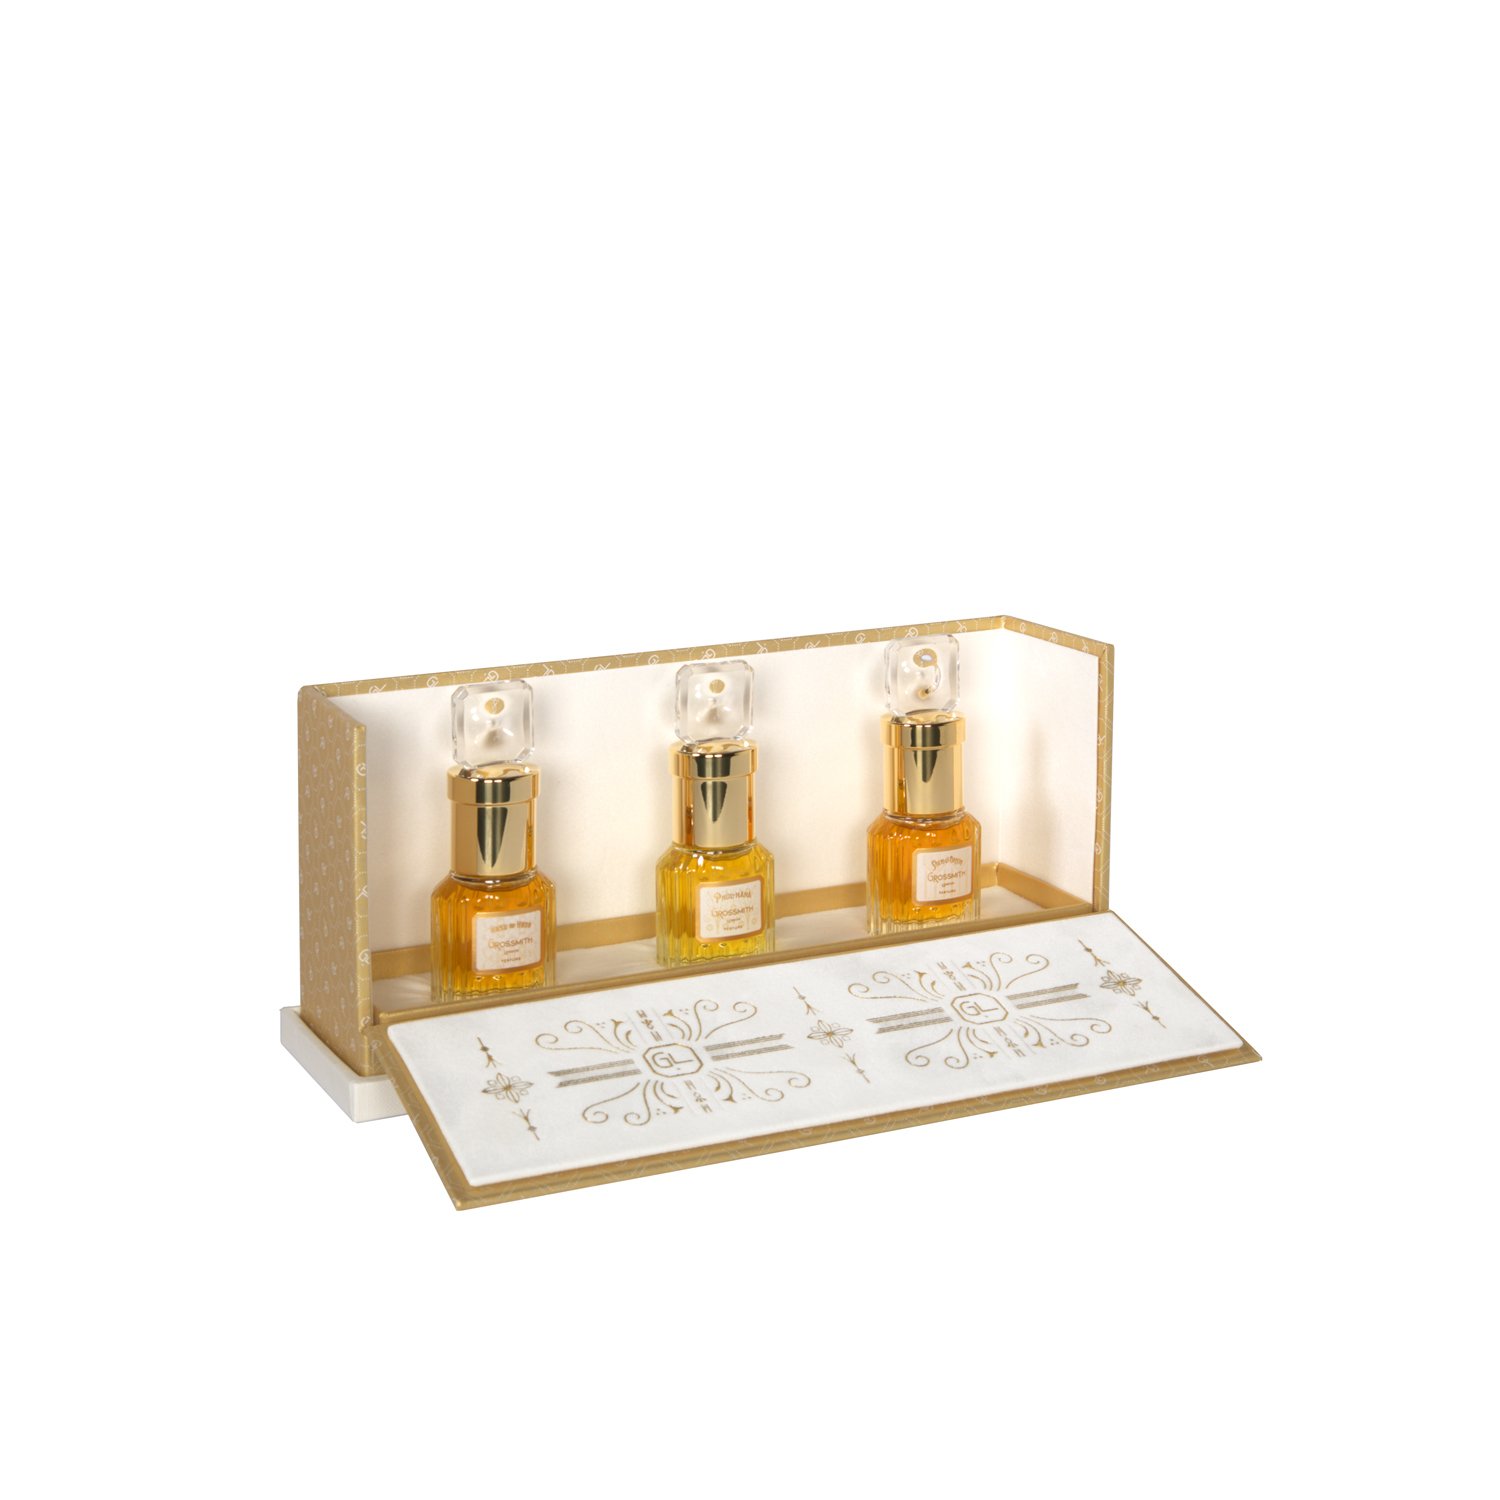 GROSSMITH Classic Collection Perfume Gift Presentation 10ml_01.jpg